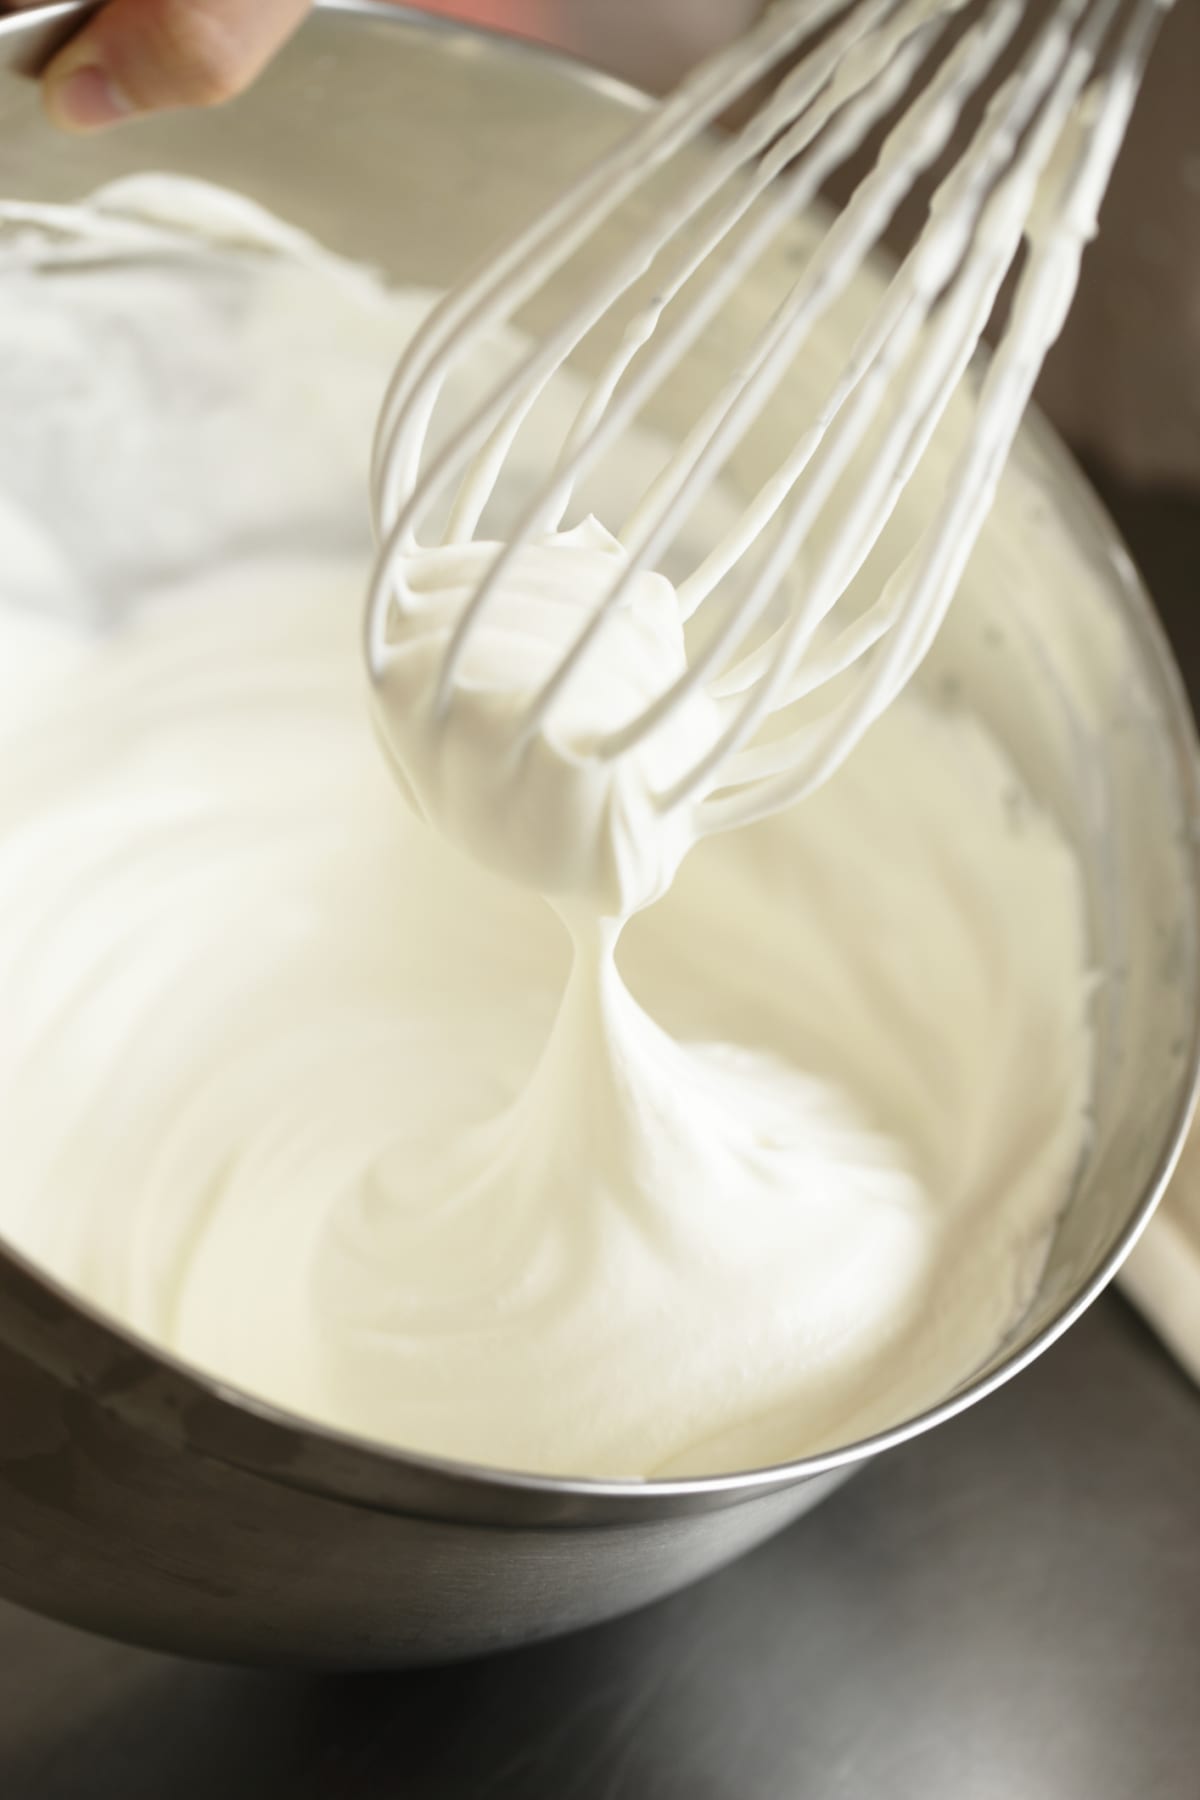 Creamy white yoghurt peaks